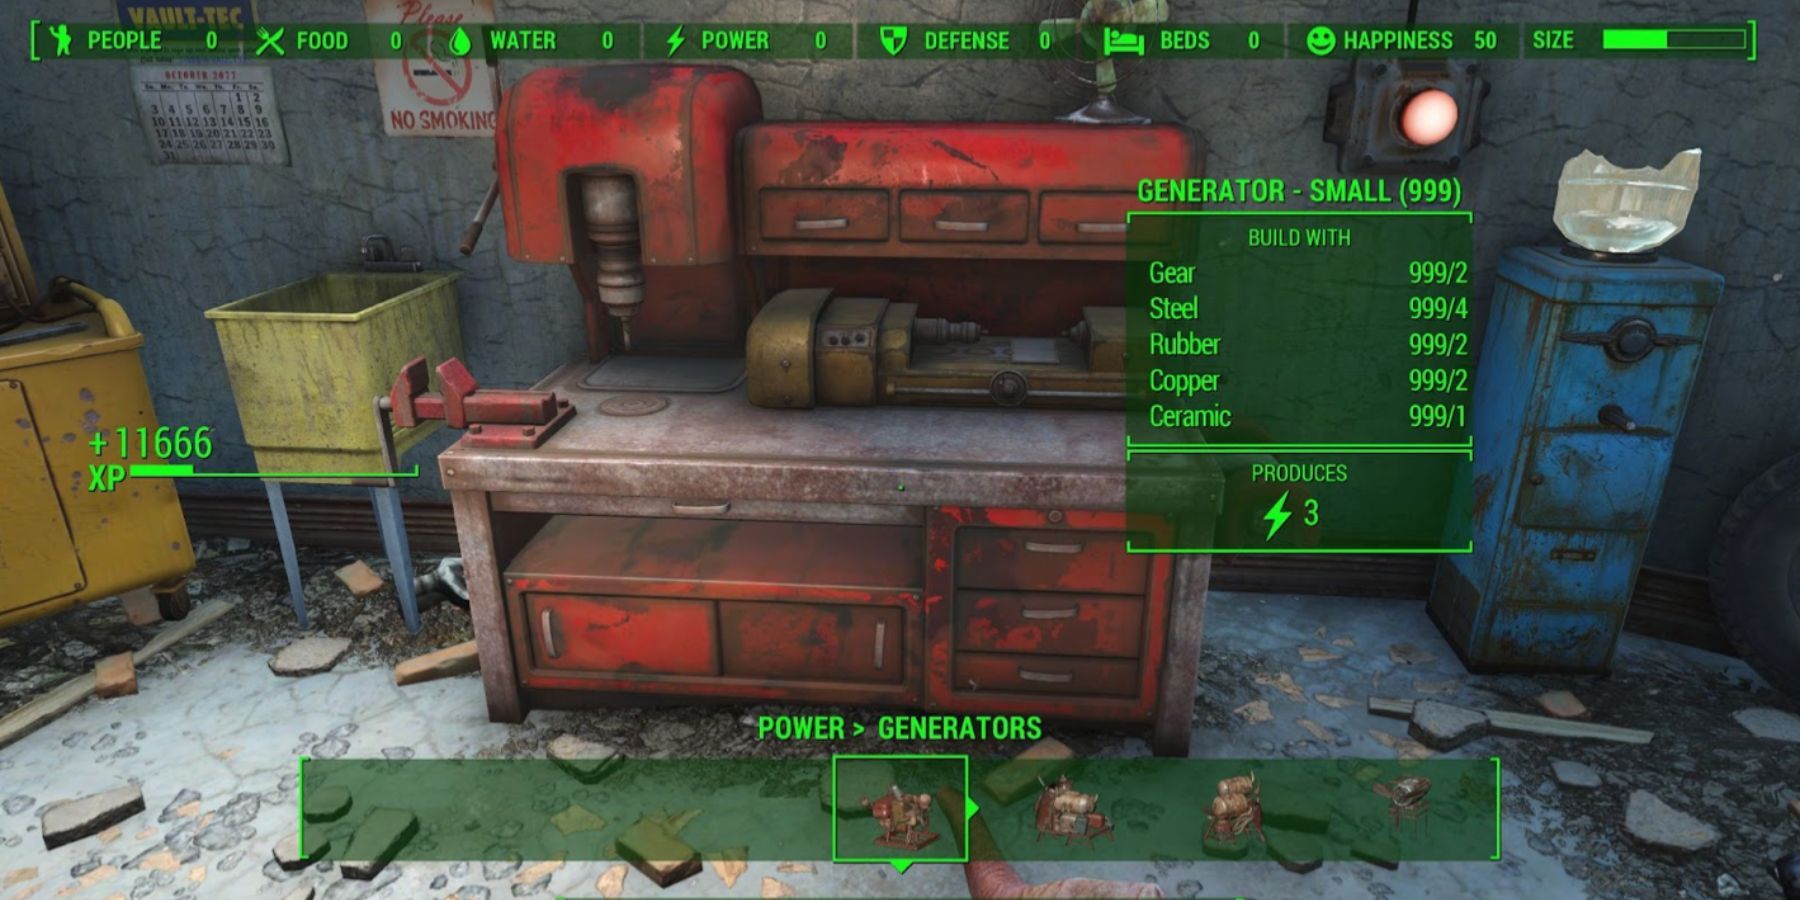 Generators in Fallout 4